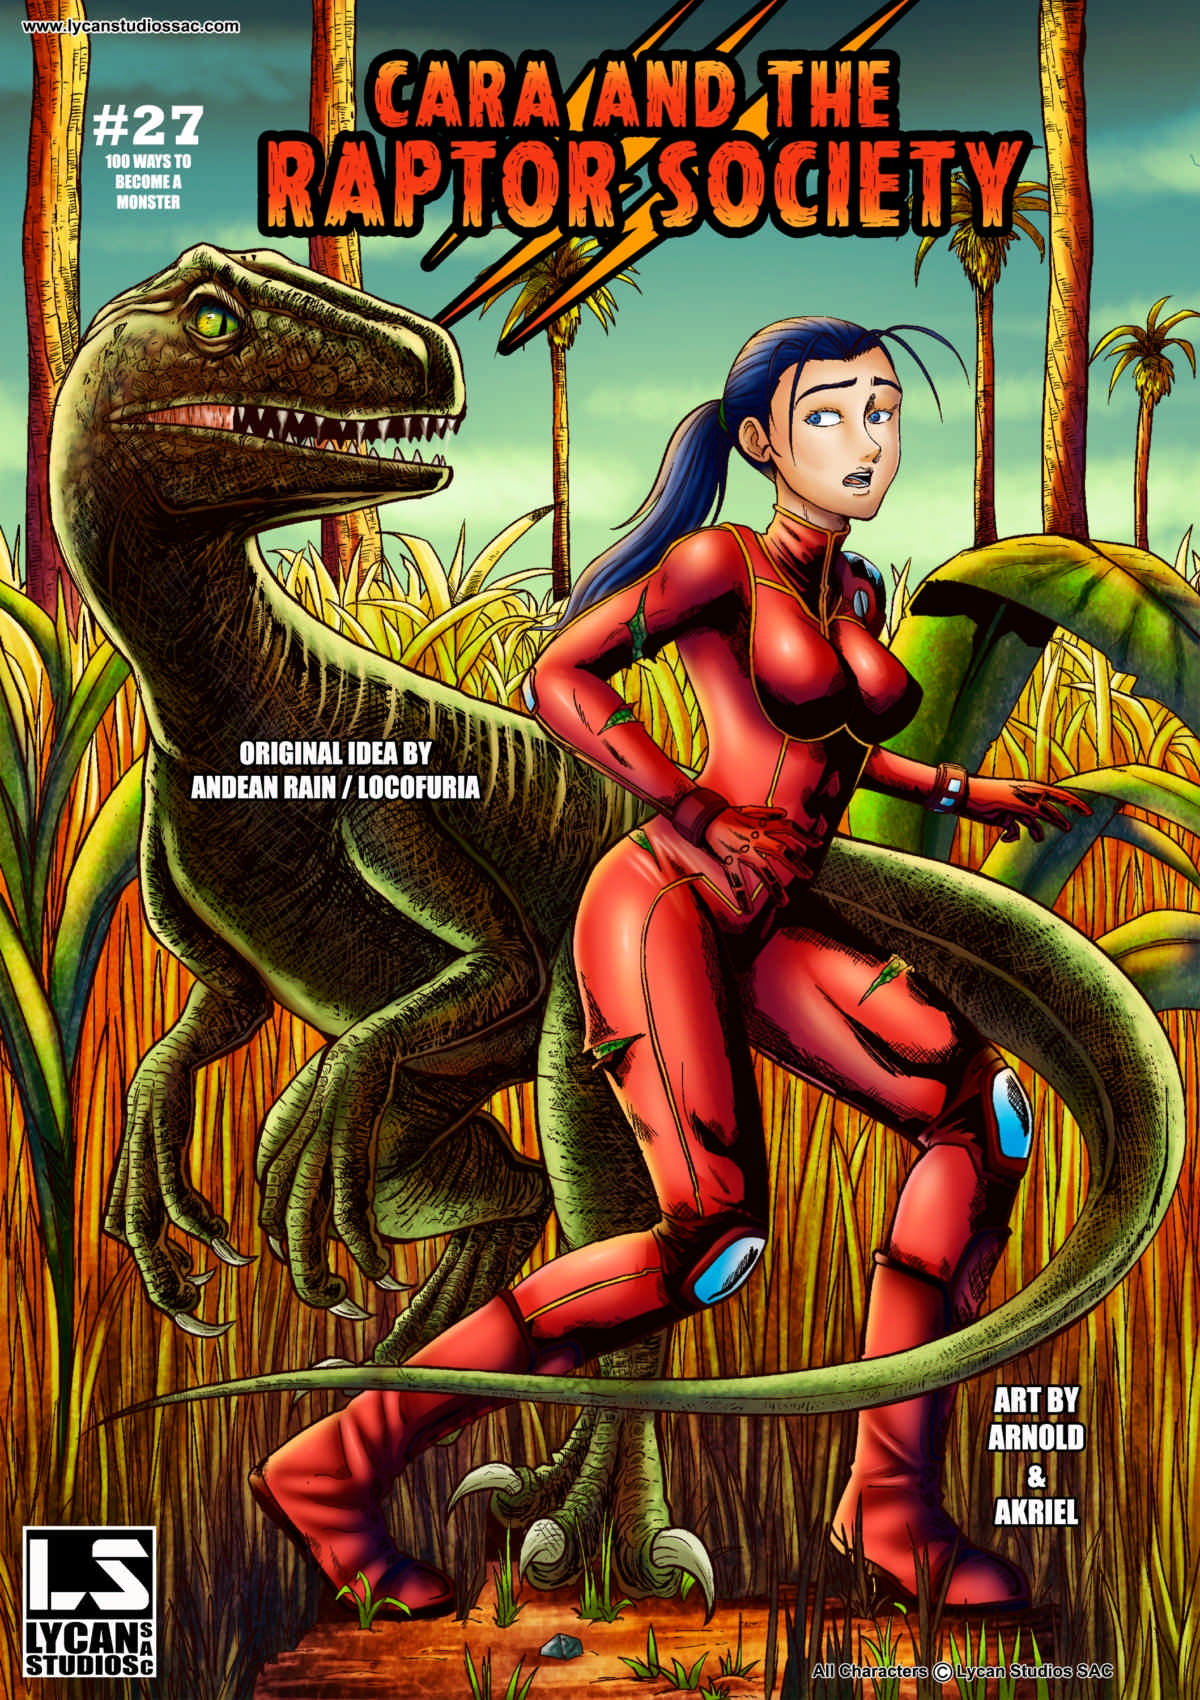 Raptor porn comics